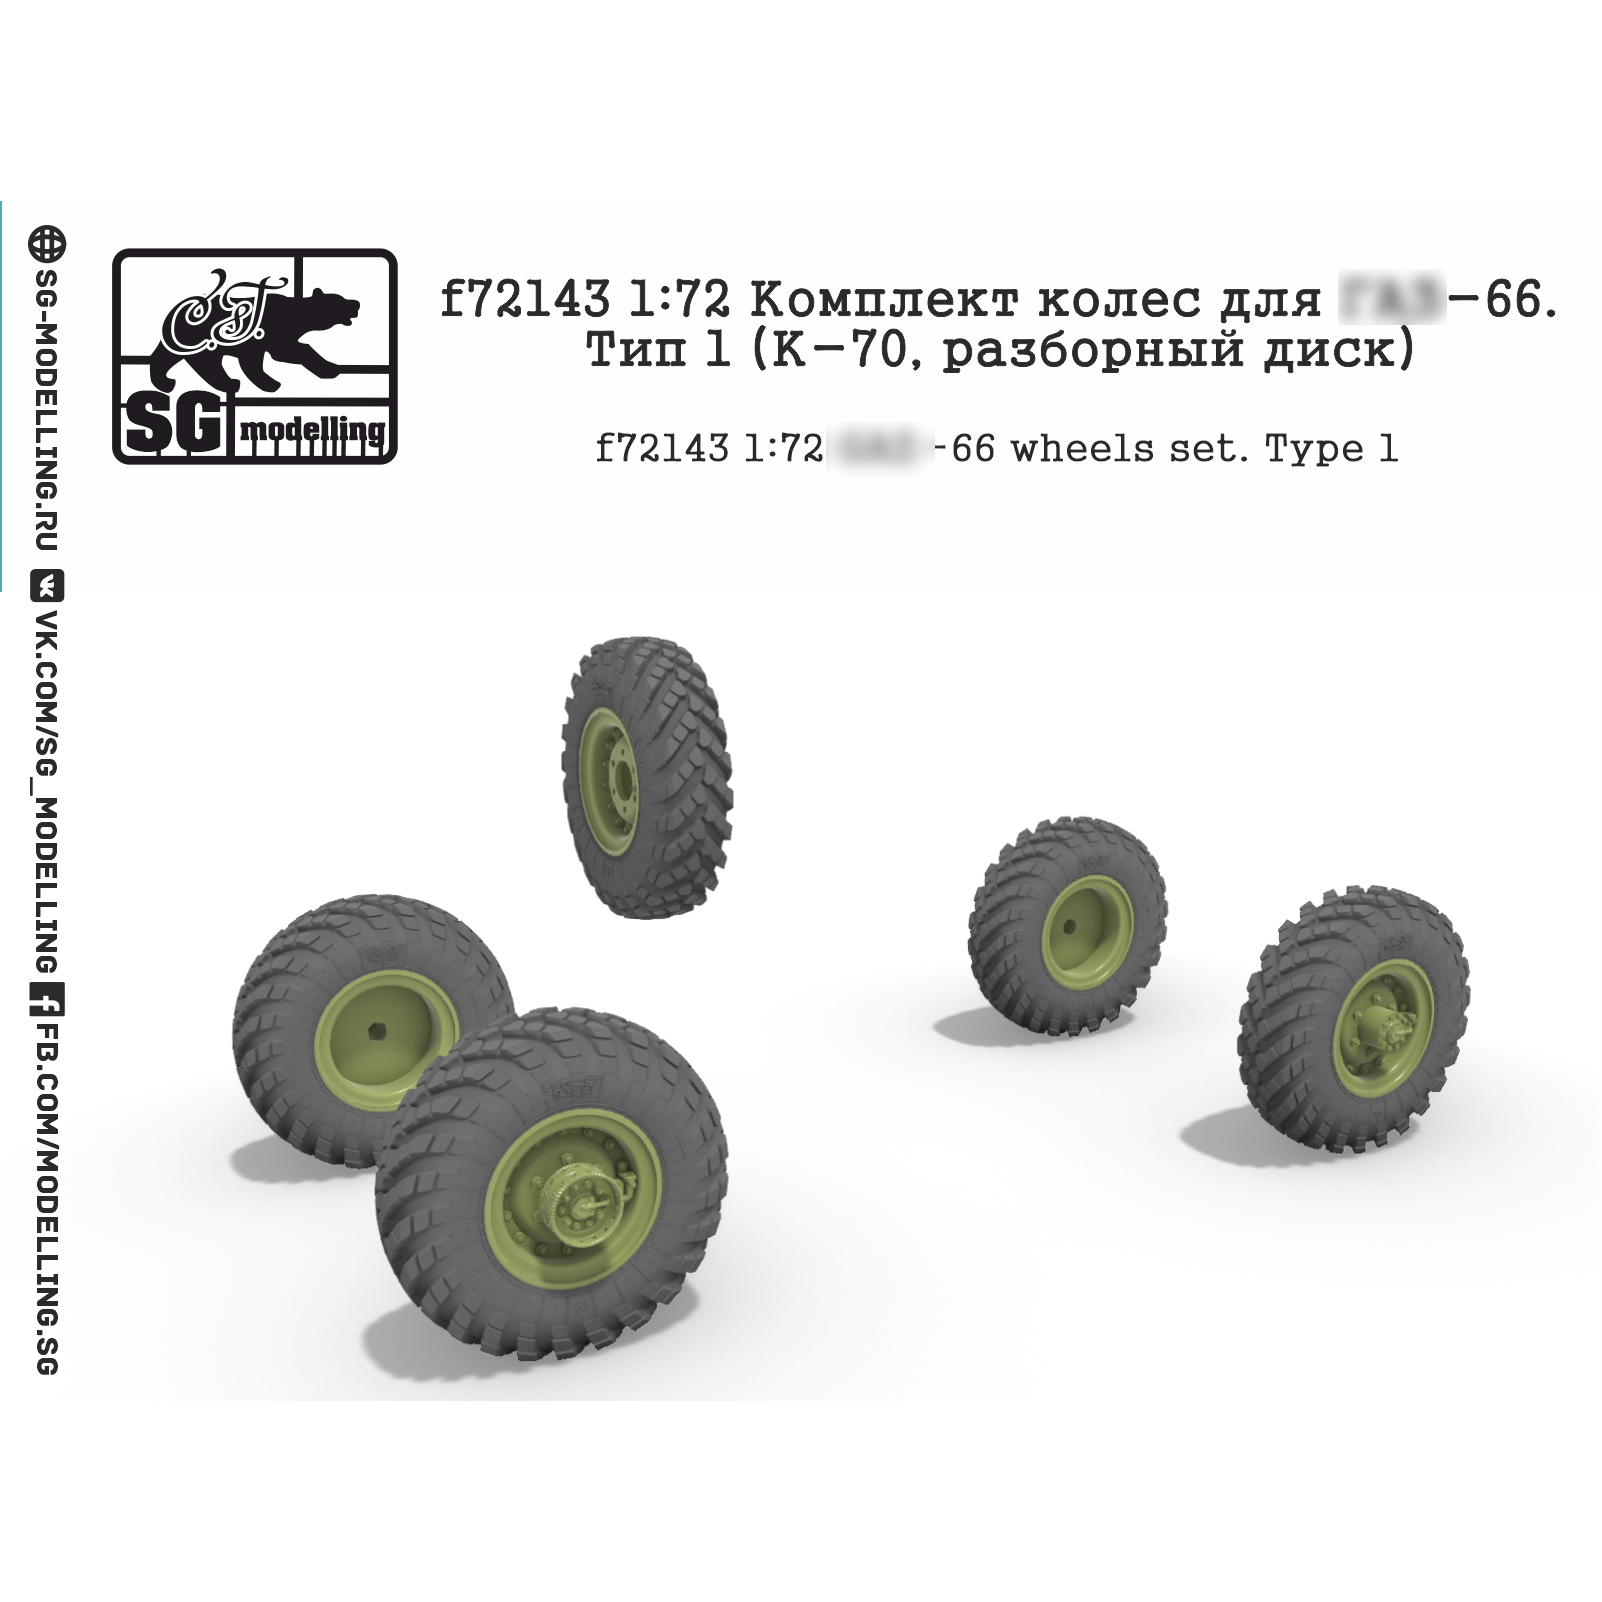 f72143 SG Modelling 1/72 Комплект колес для G@Z-66, Тип 1 (К-70, разборный диск)